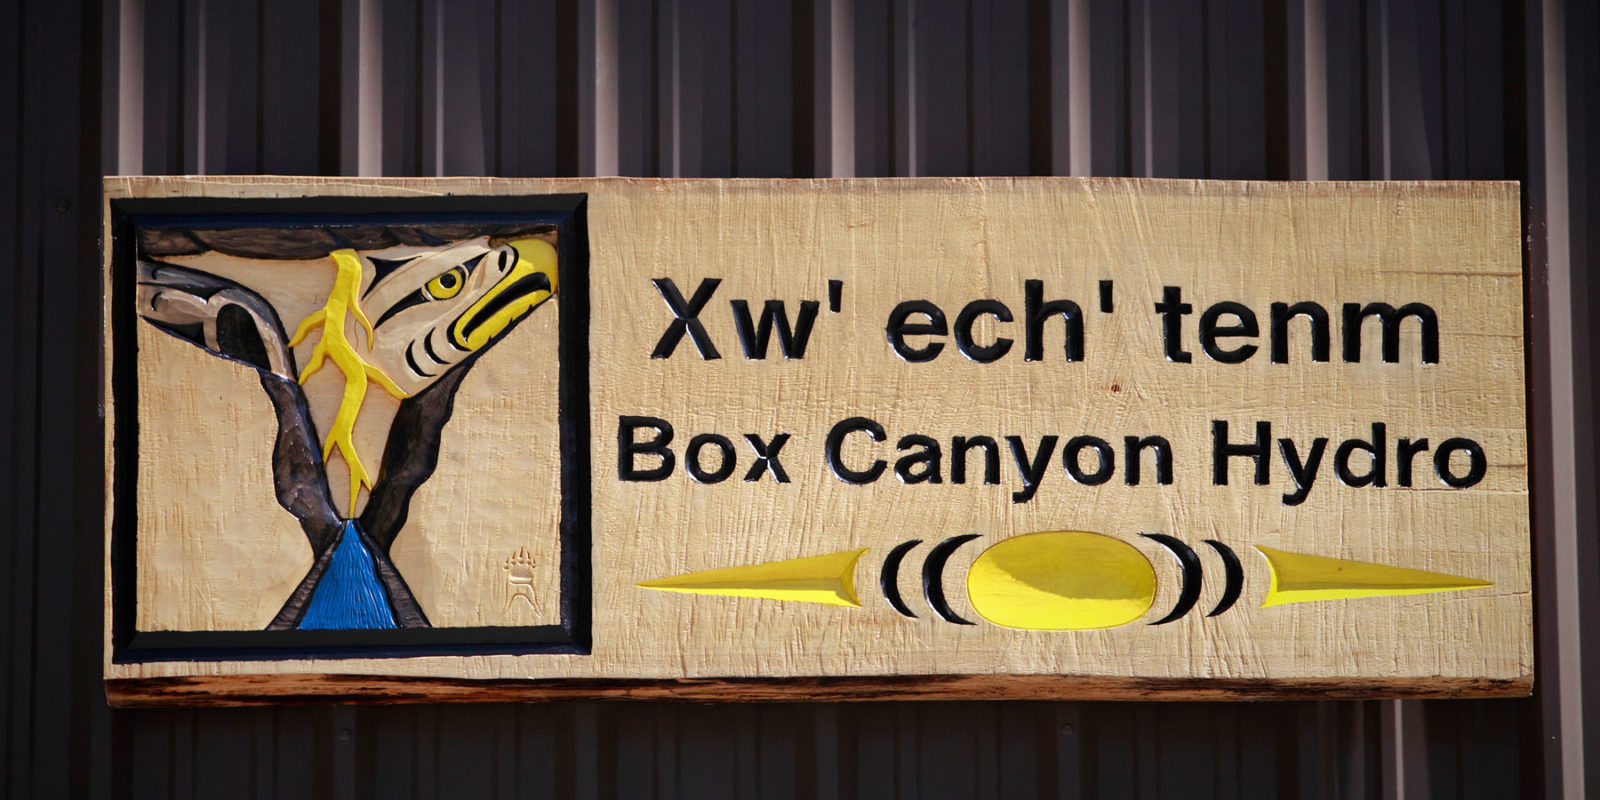 Box Canyon Hydro